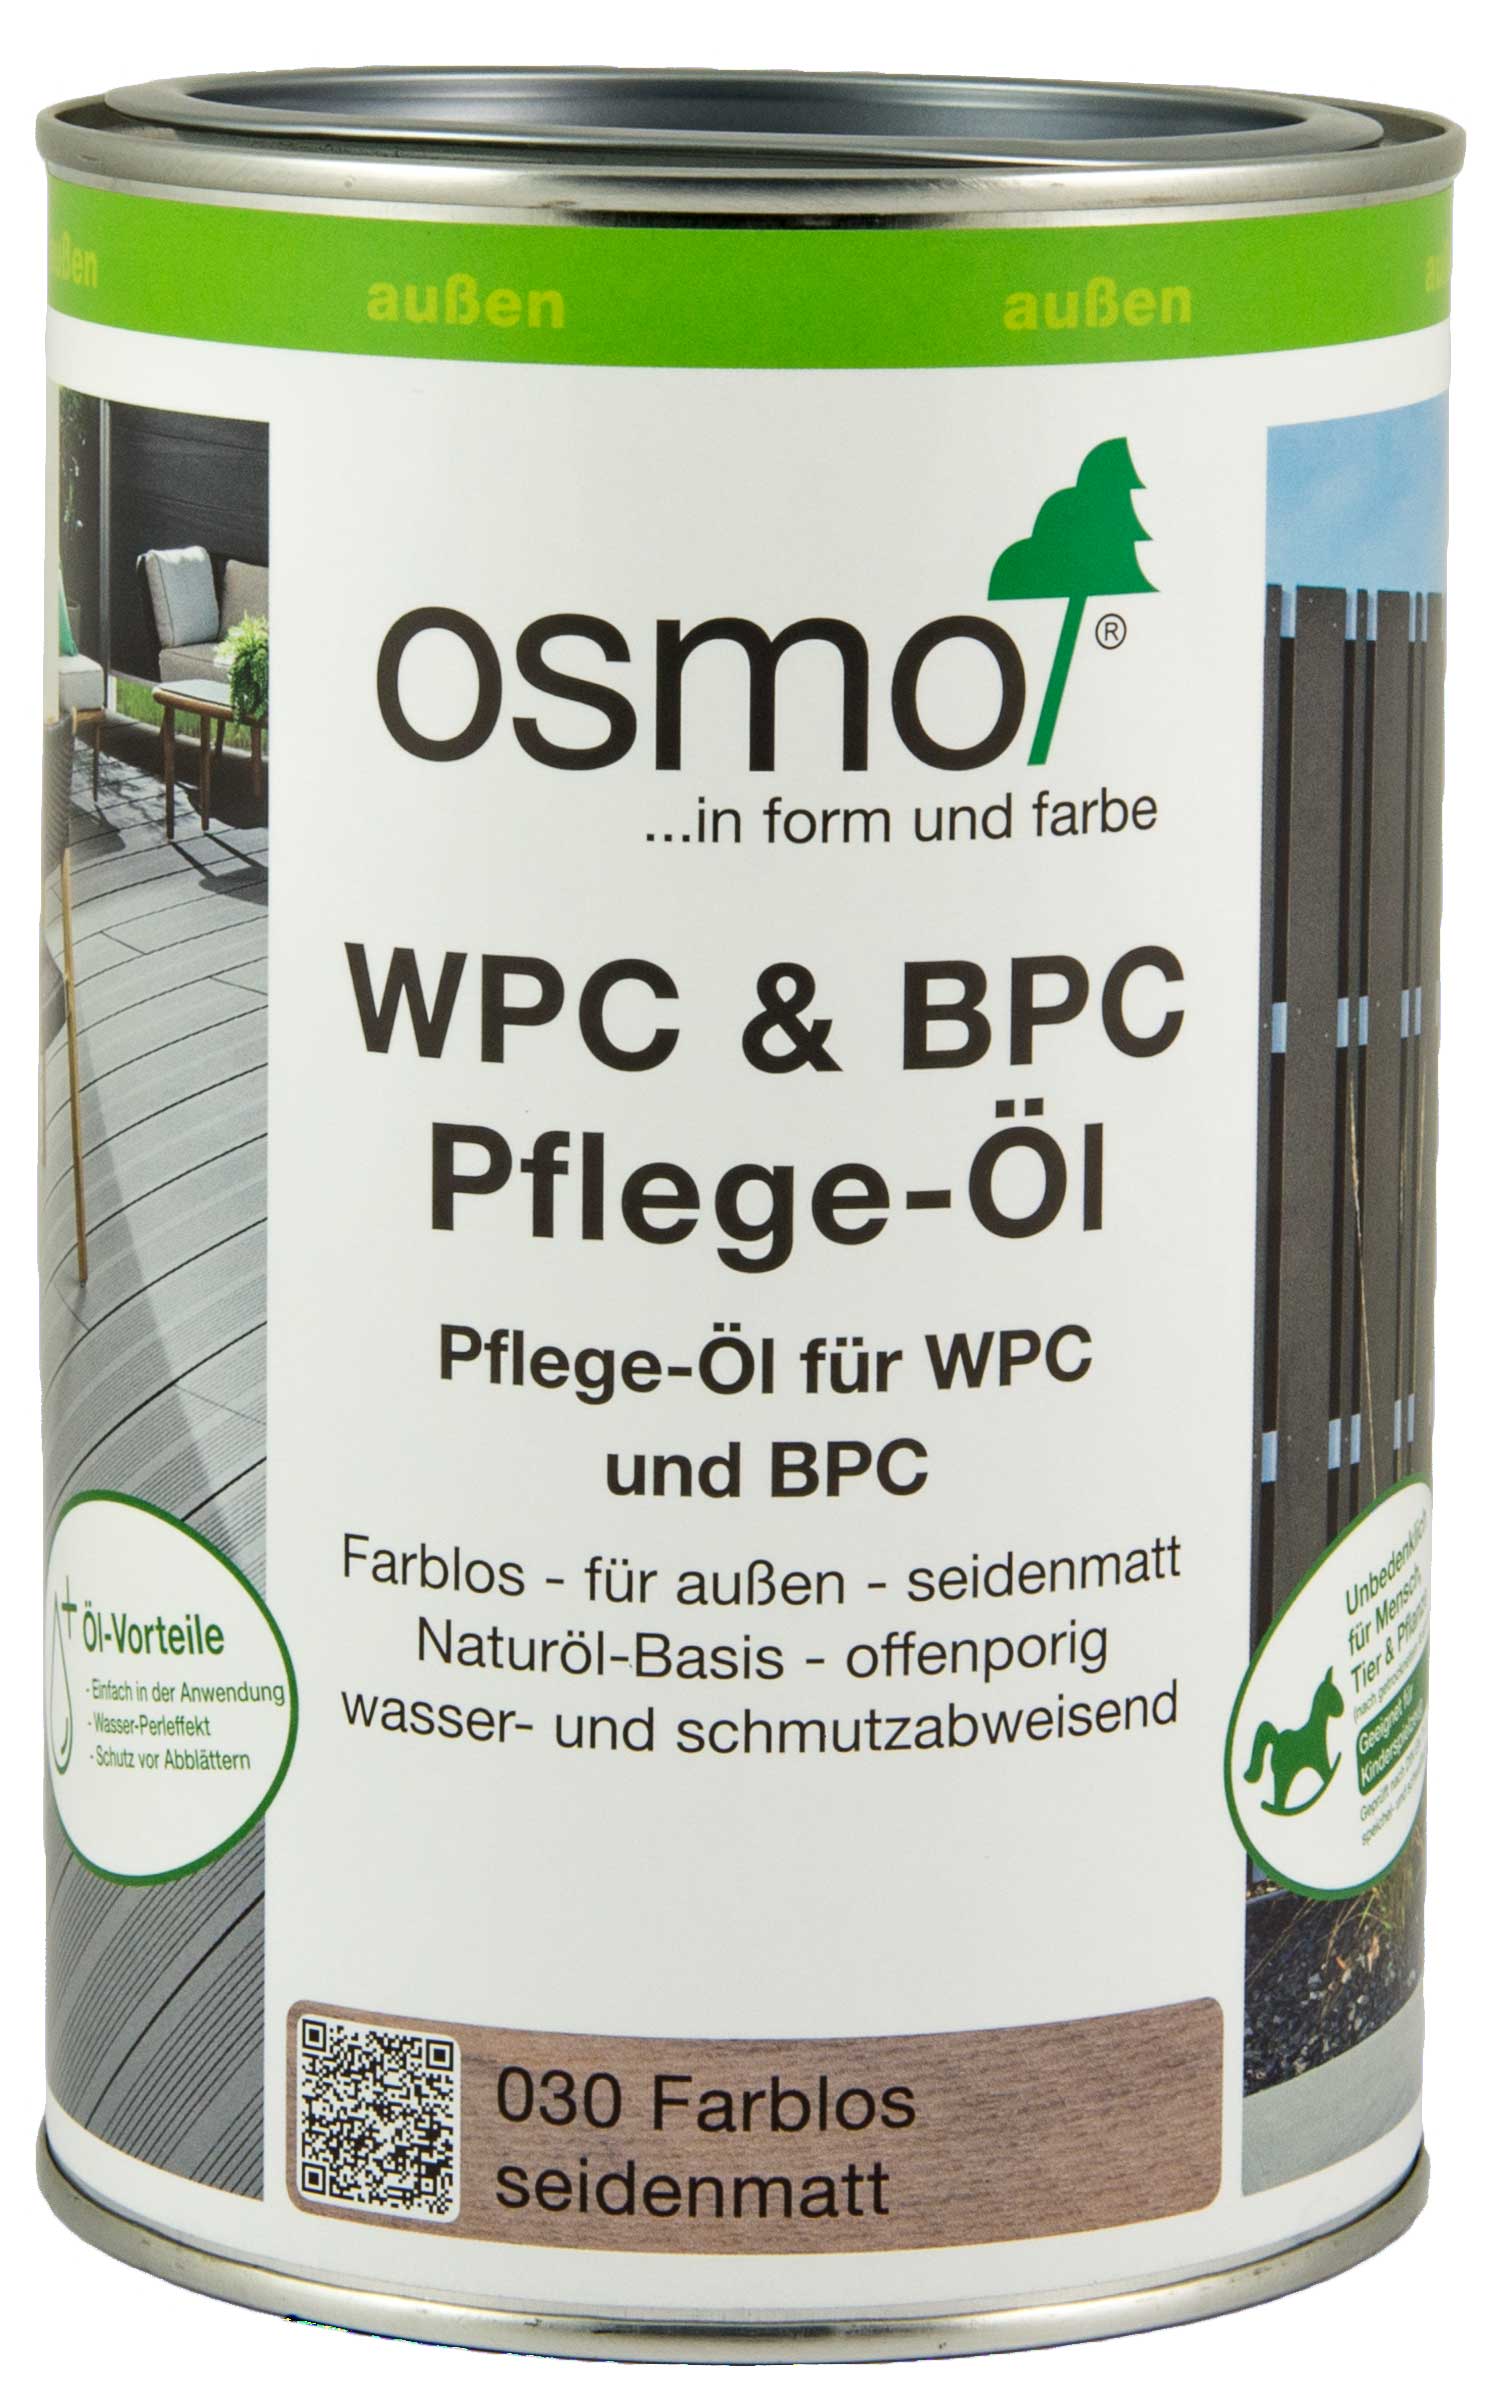 Osmo WPC & BPC Pflege -Öl | 030 Farblos